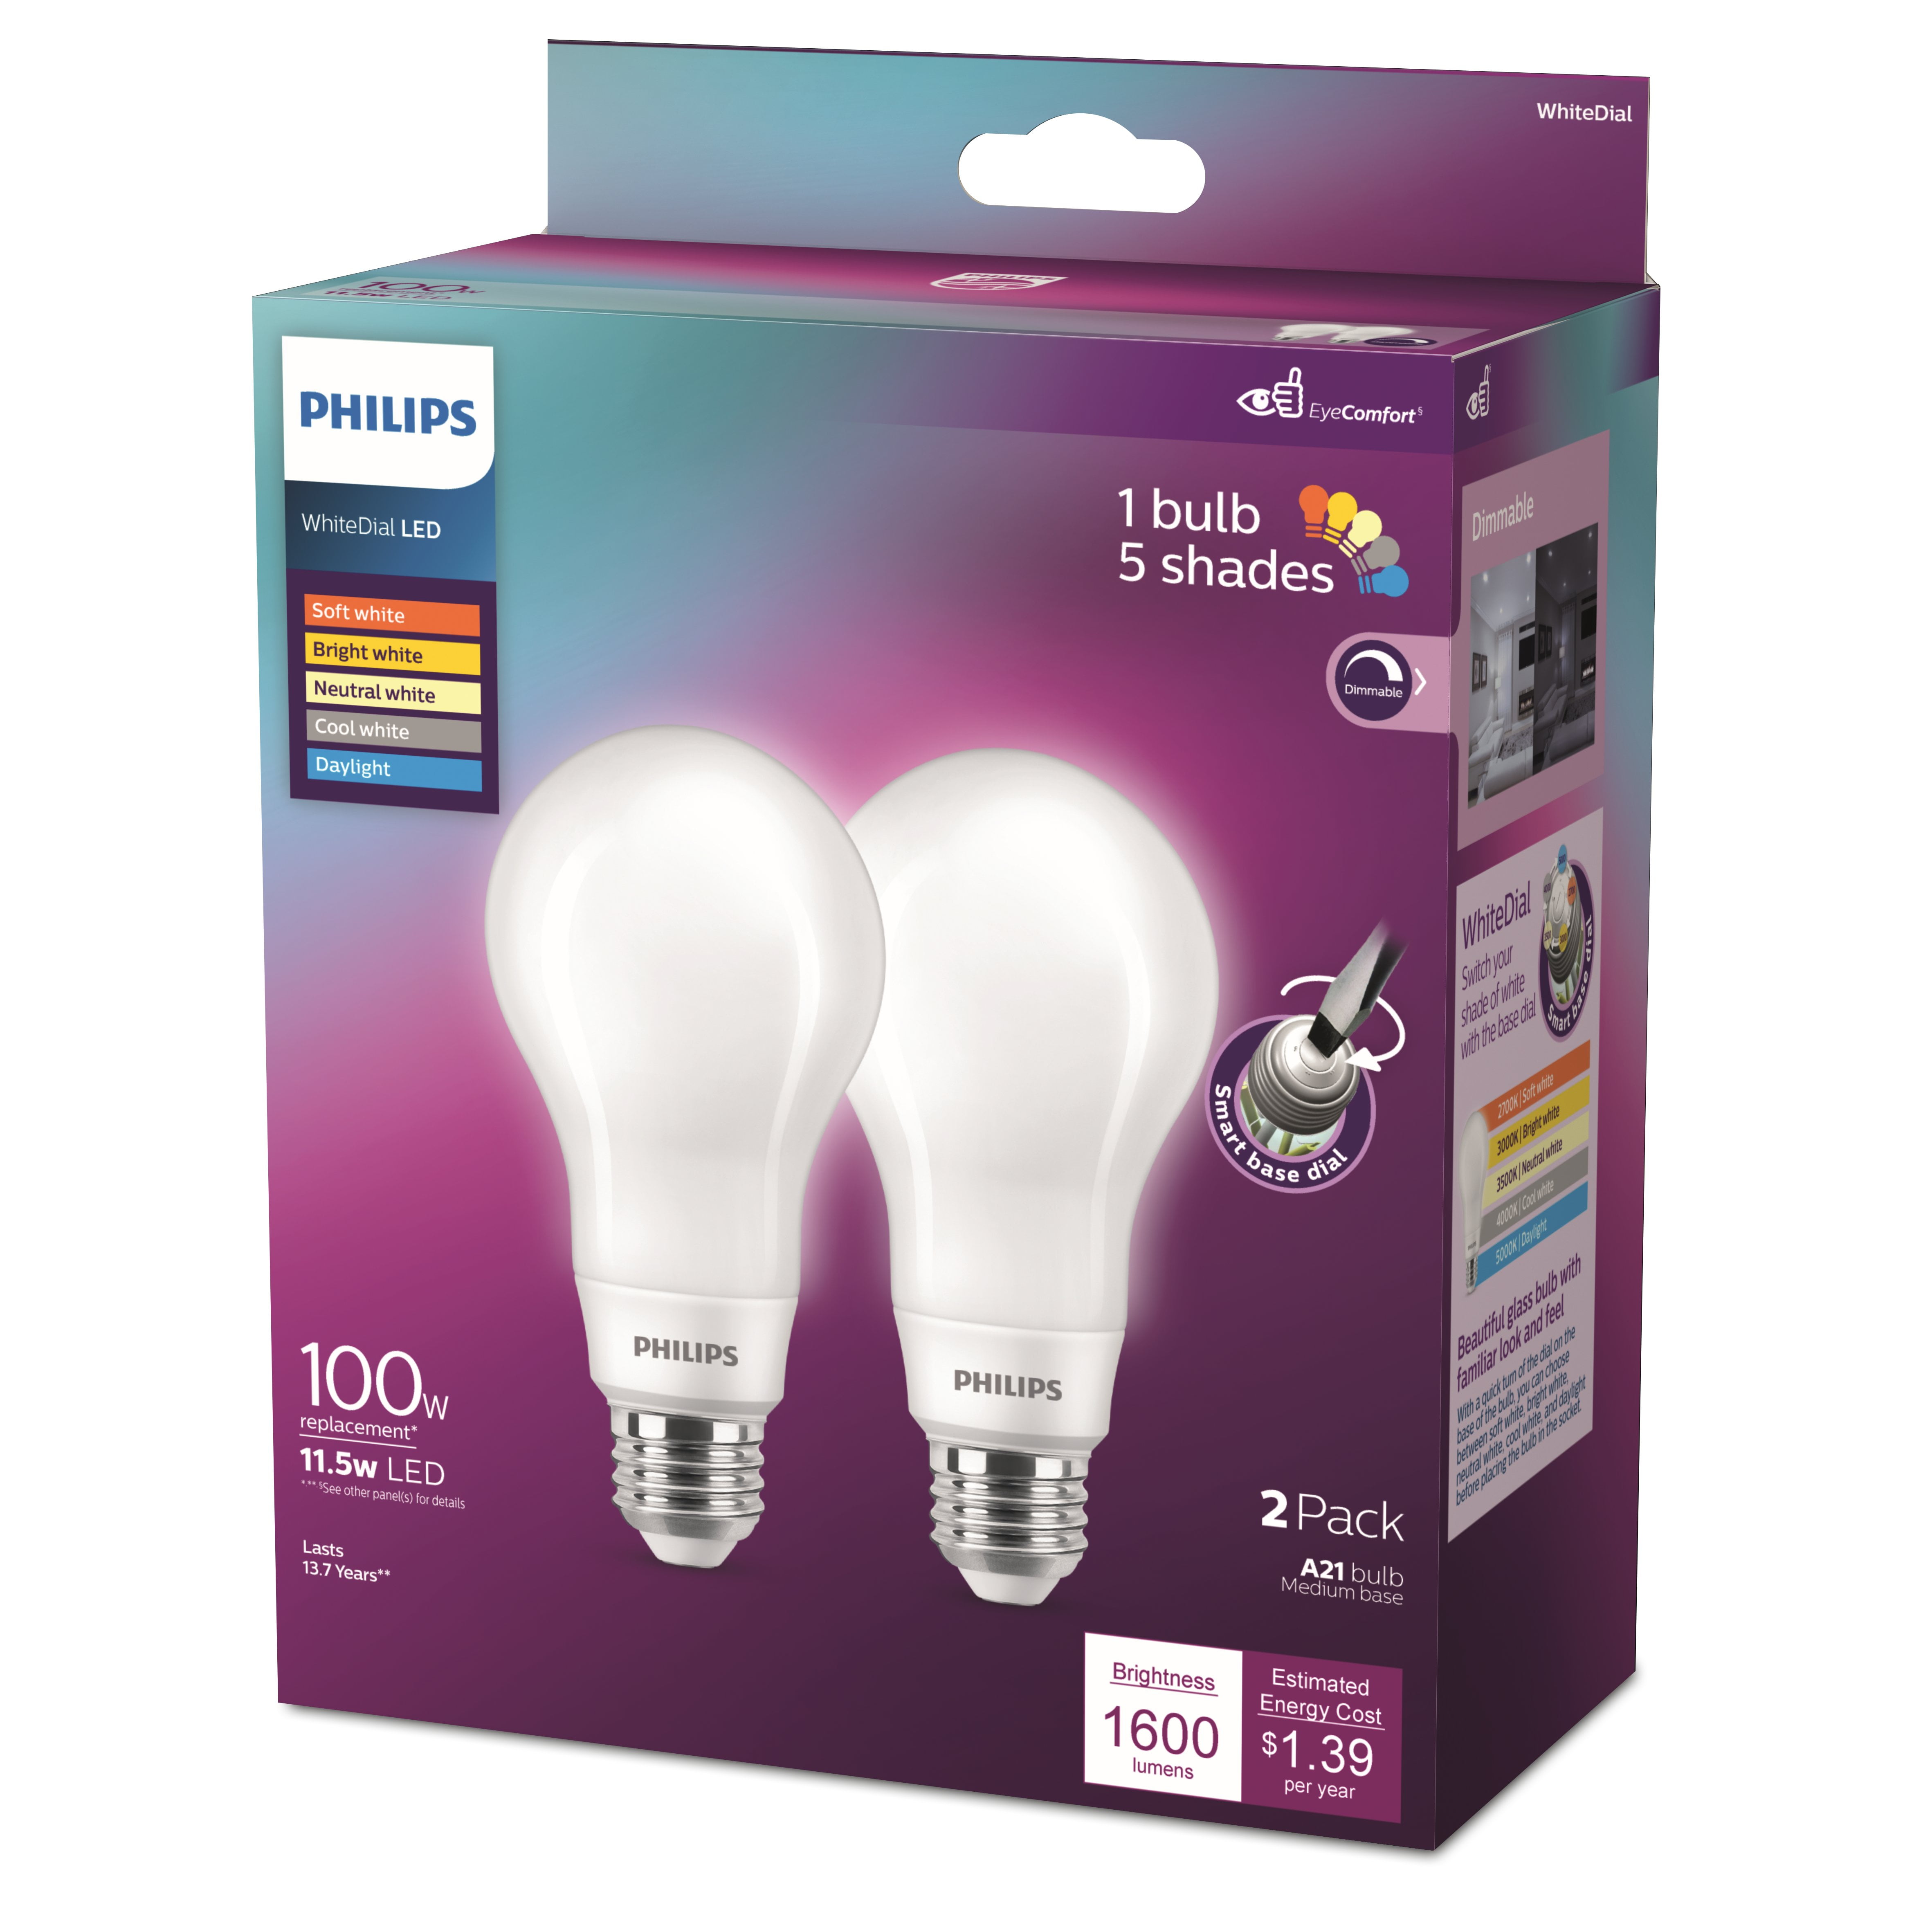 Philips 220343 Plc18w/827/Xew/4p/Alto Compact Fluorescent Lamp